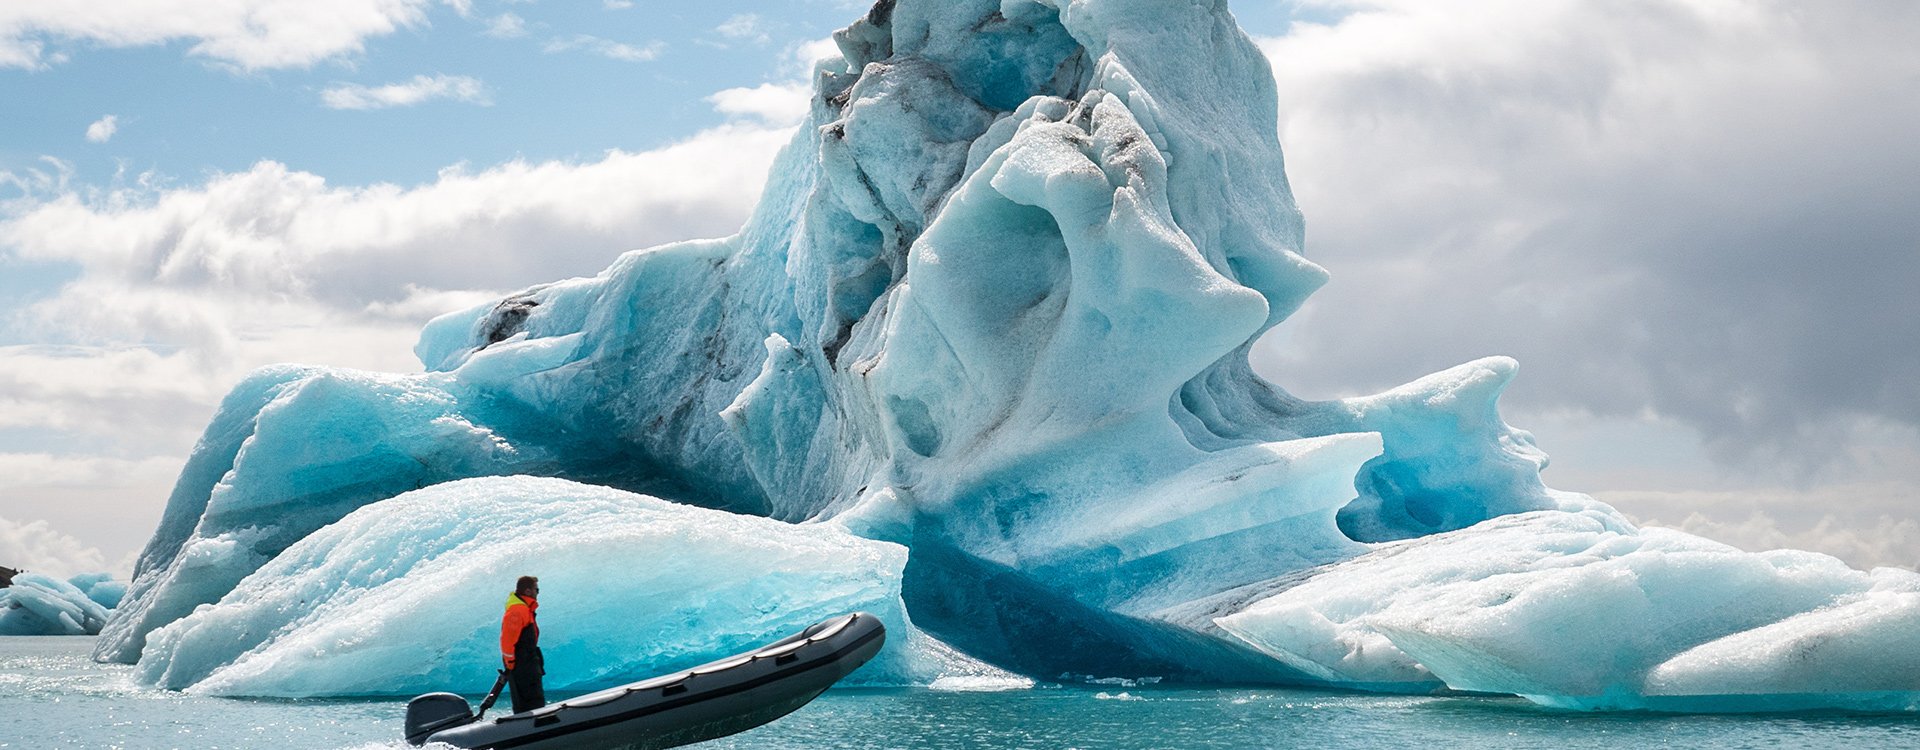 Antarctica_Boat passing the iceberg